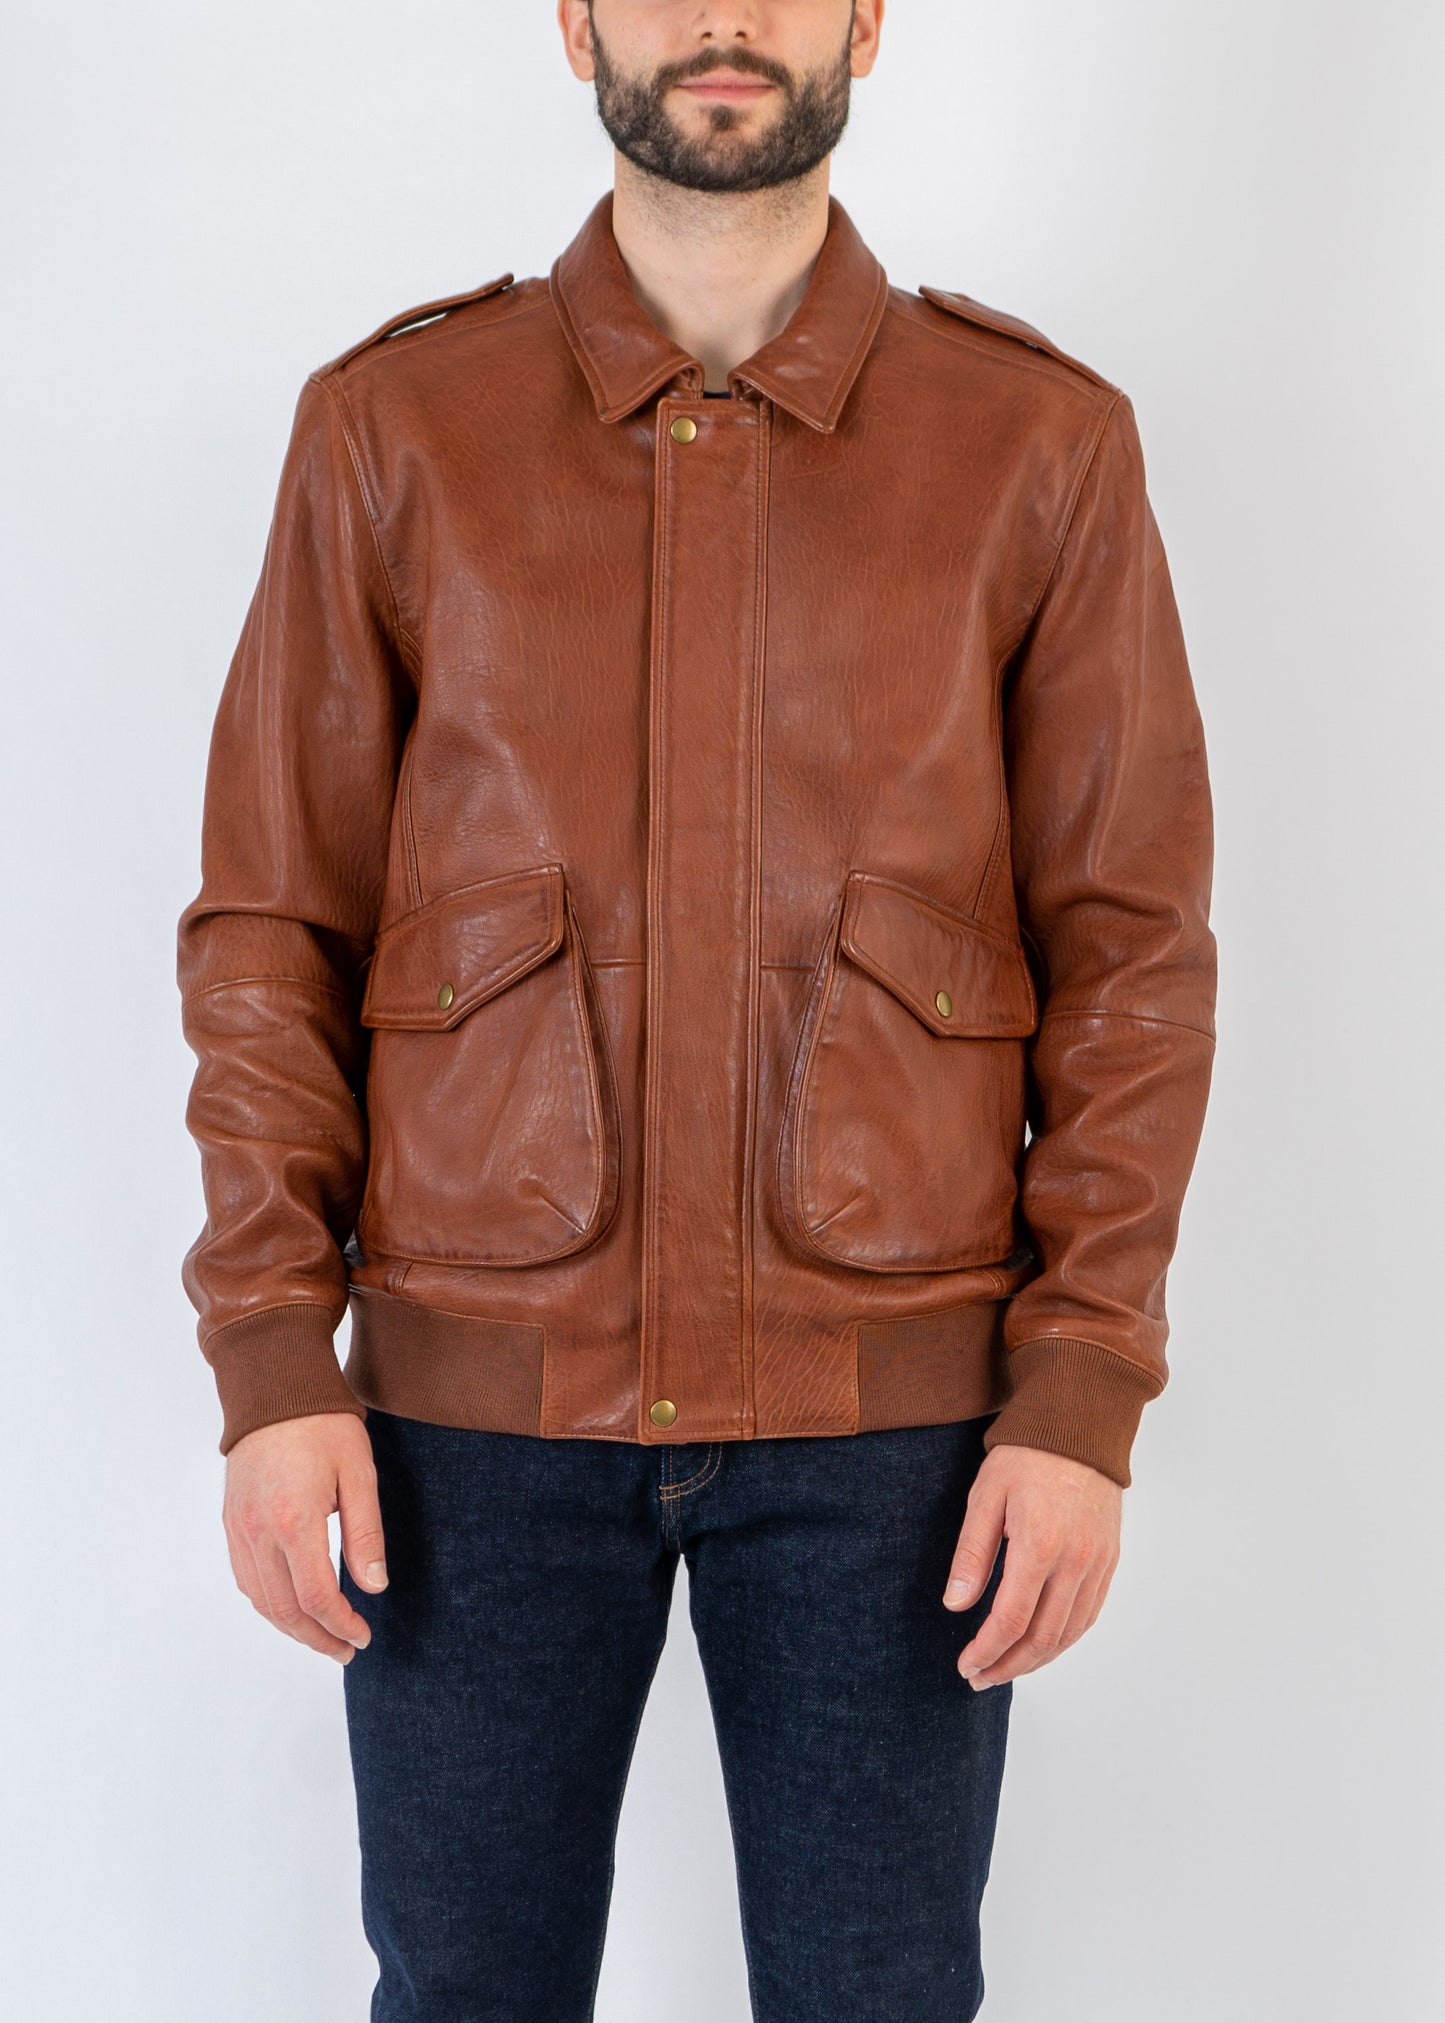 new look aviator jacket aviator bomber jacket leather jacket flight jacket